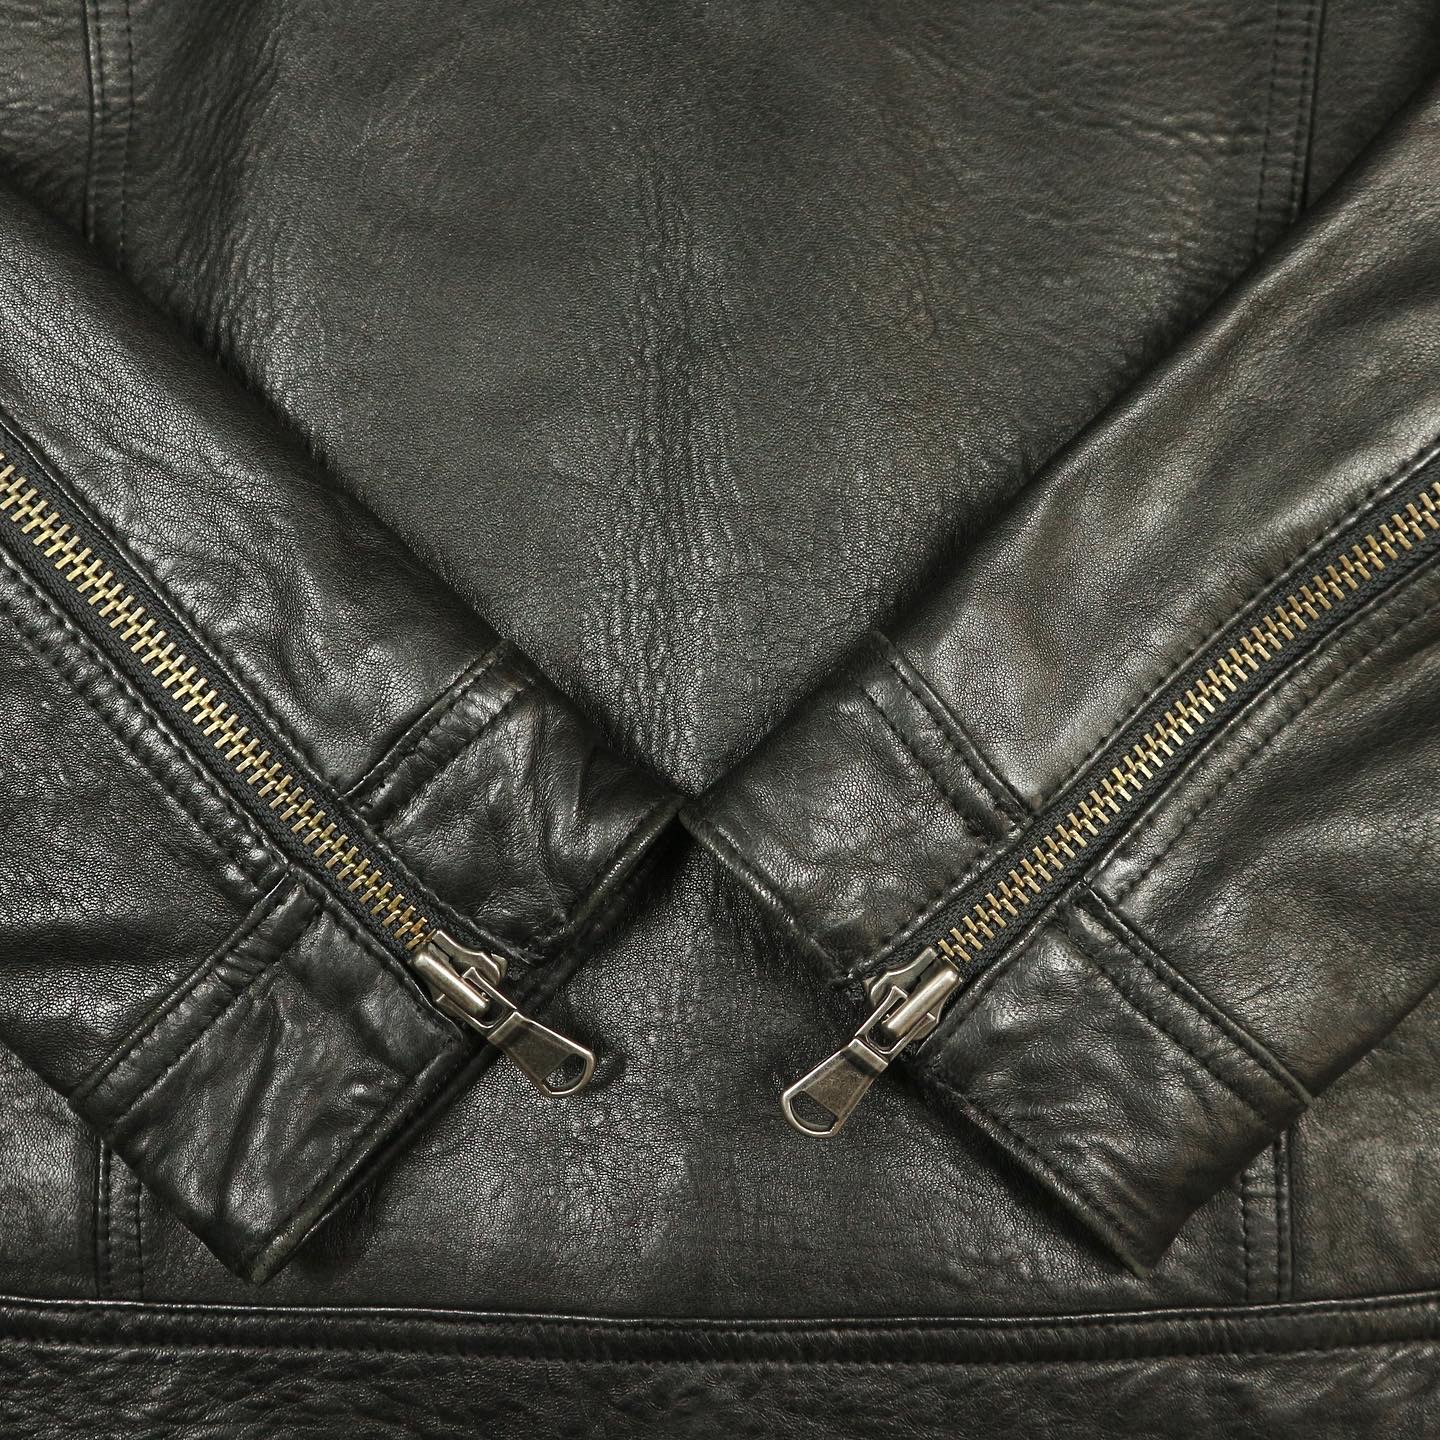 Adriano Goldschmied Leather Jacket Size M